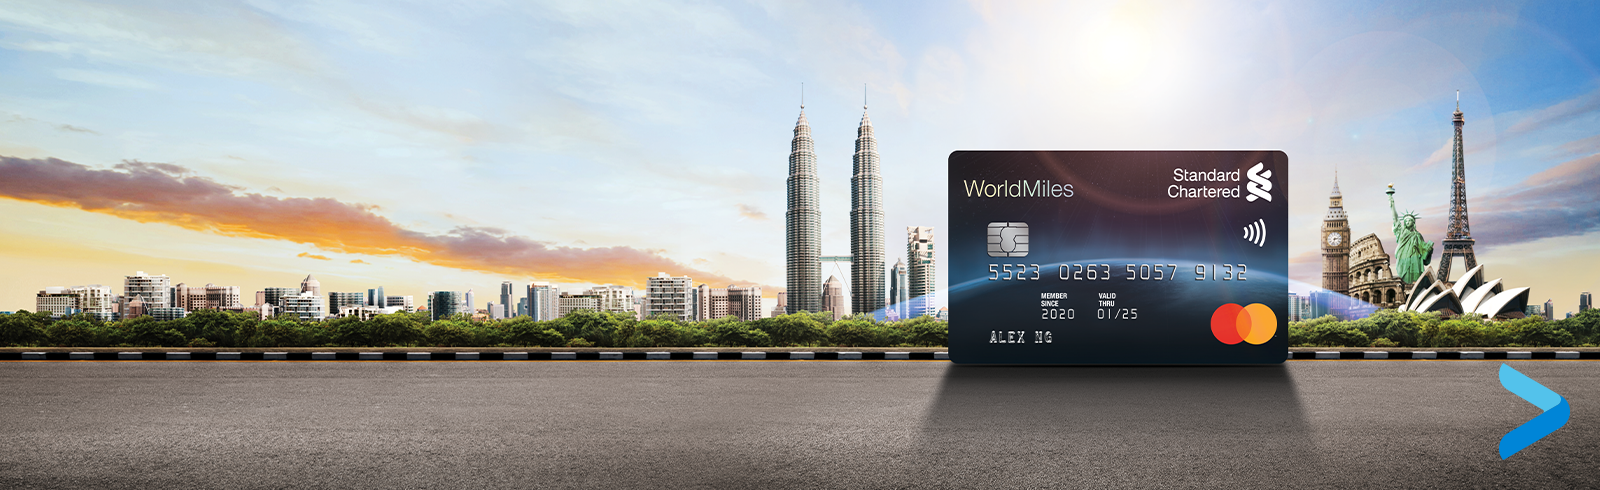 Worldmiles Mastercard® | Apply Travel Credit Card ...